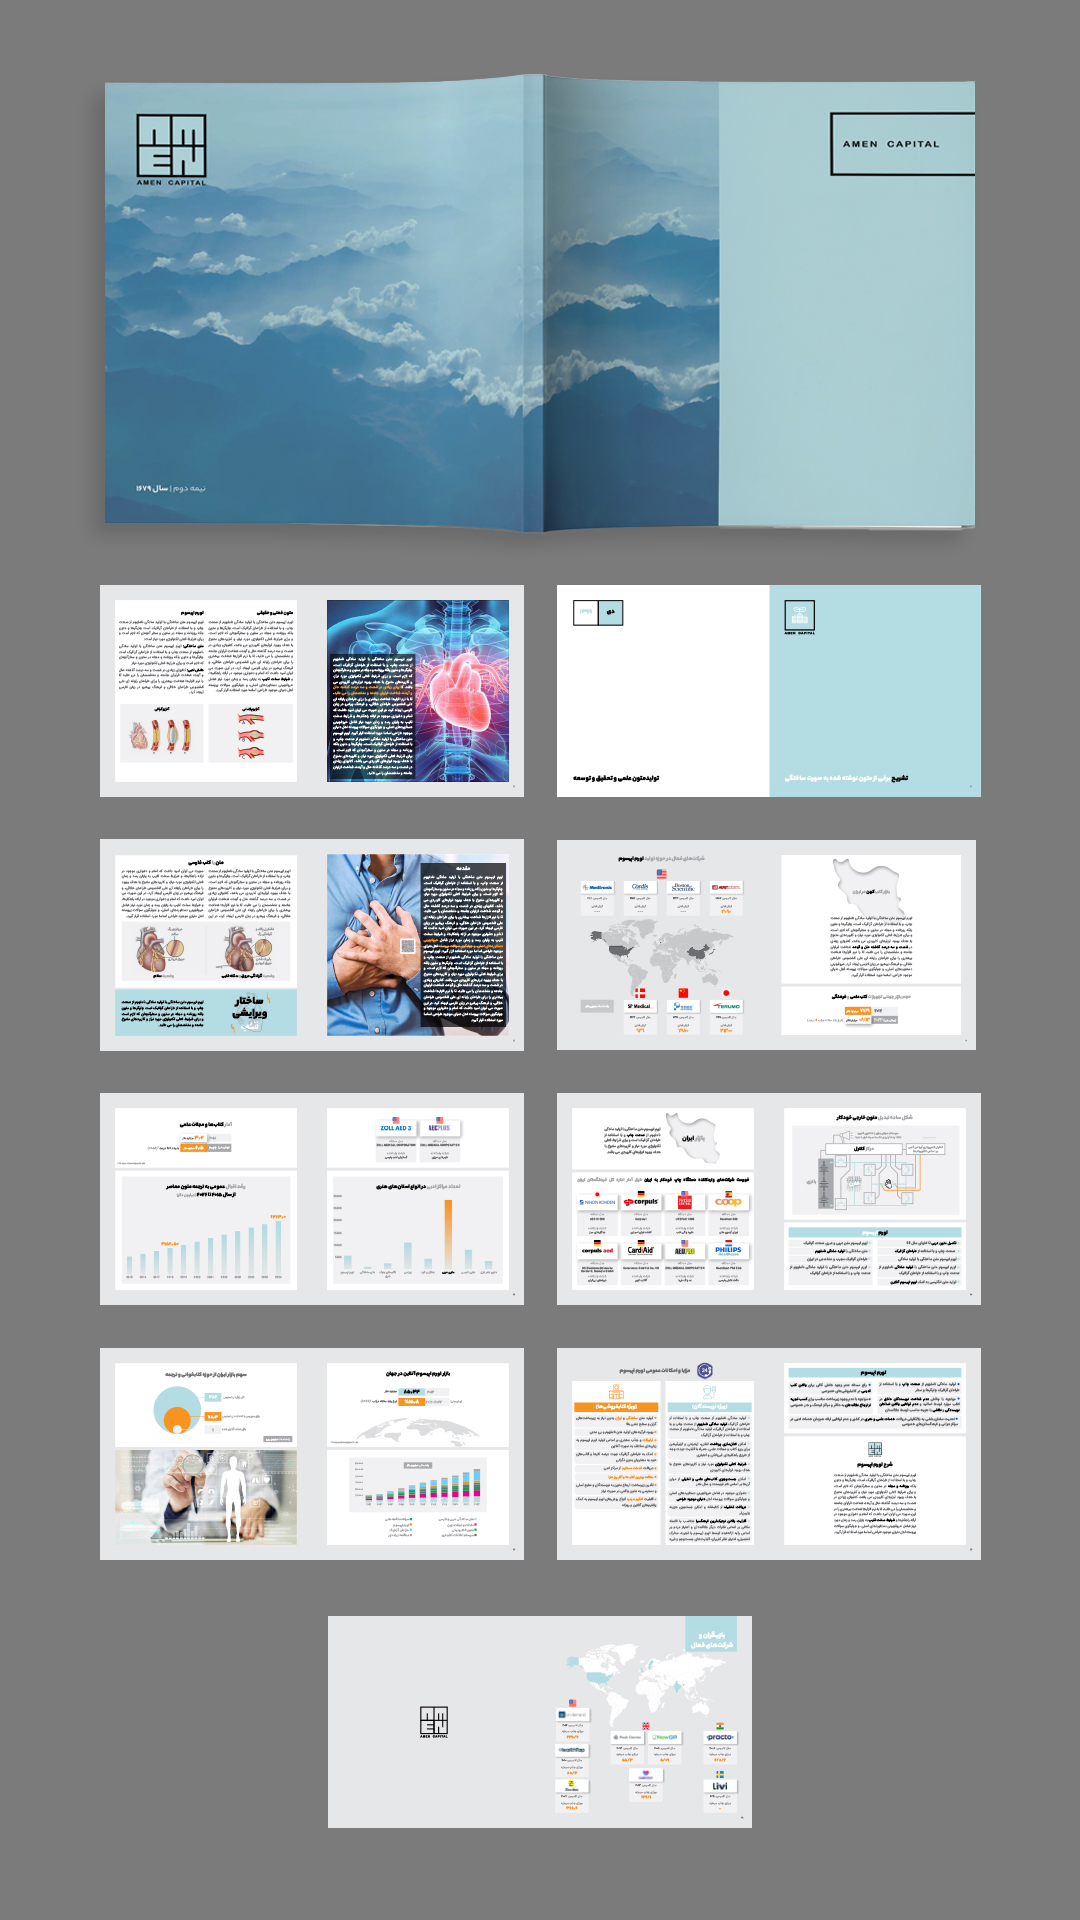 Amen Capital catalouge mohsen hashemi graphic designer layout design cataloge brochure report magazine mag design